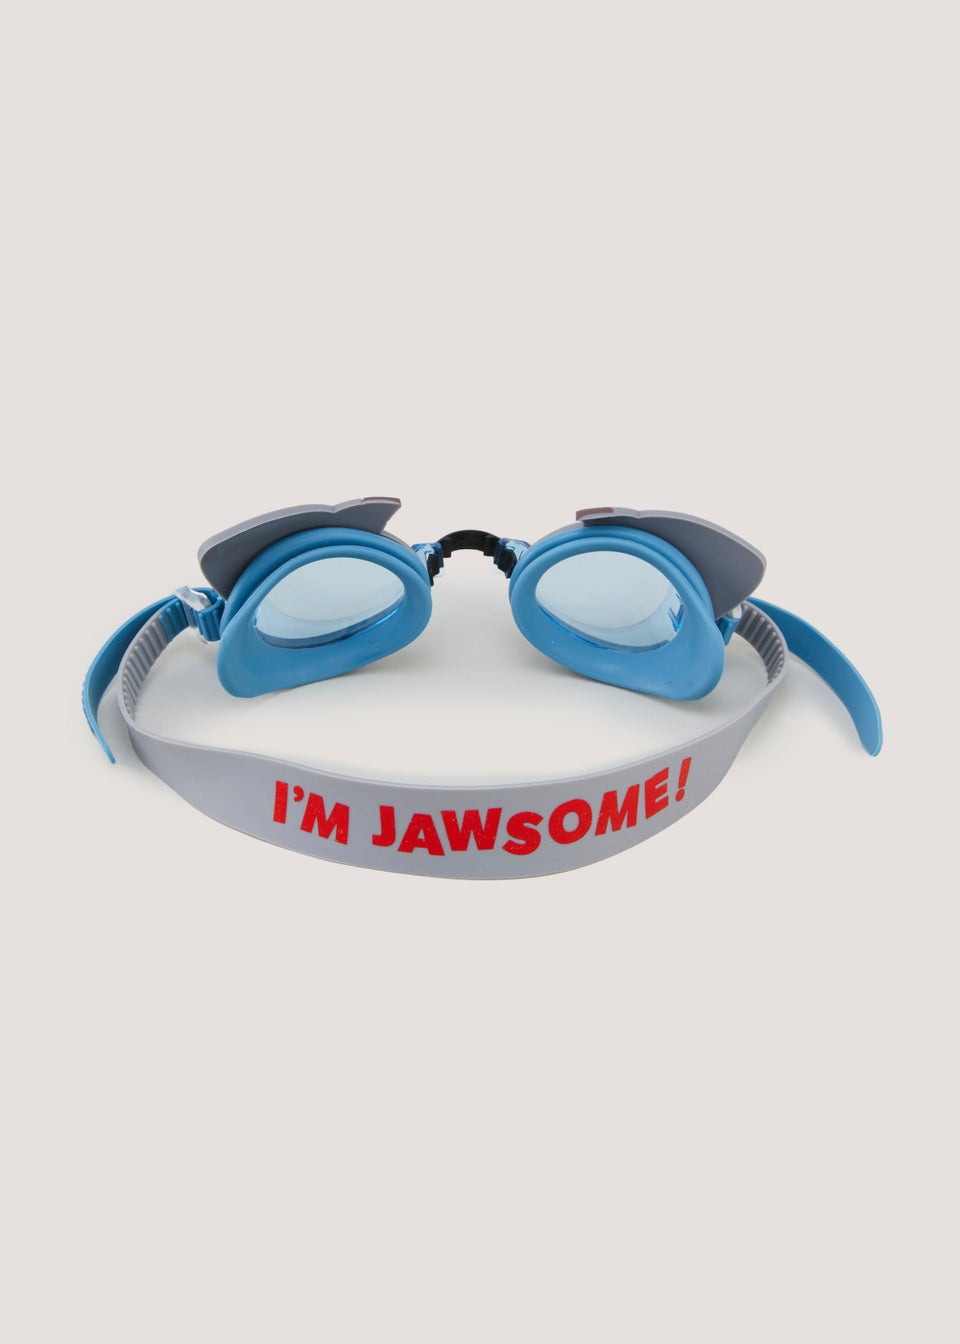 Boys Blue Shark Goggles (One Size)